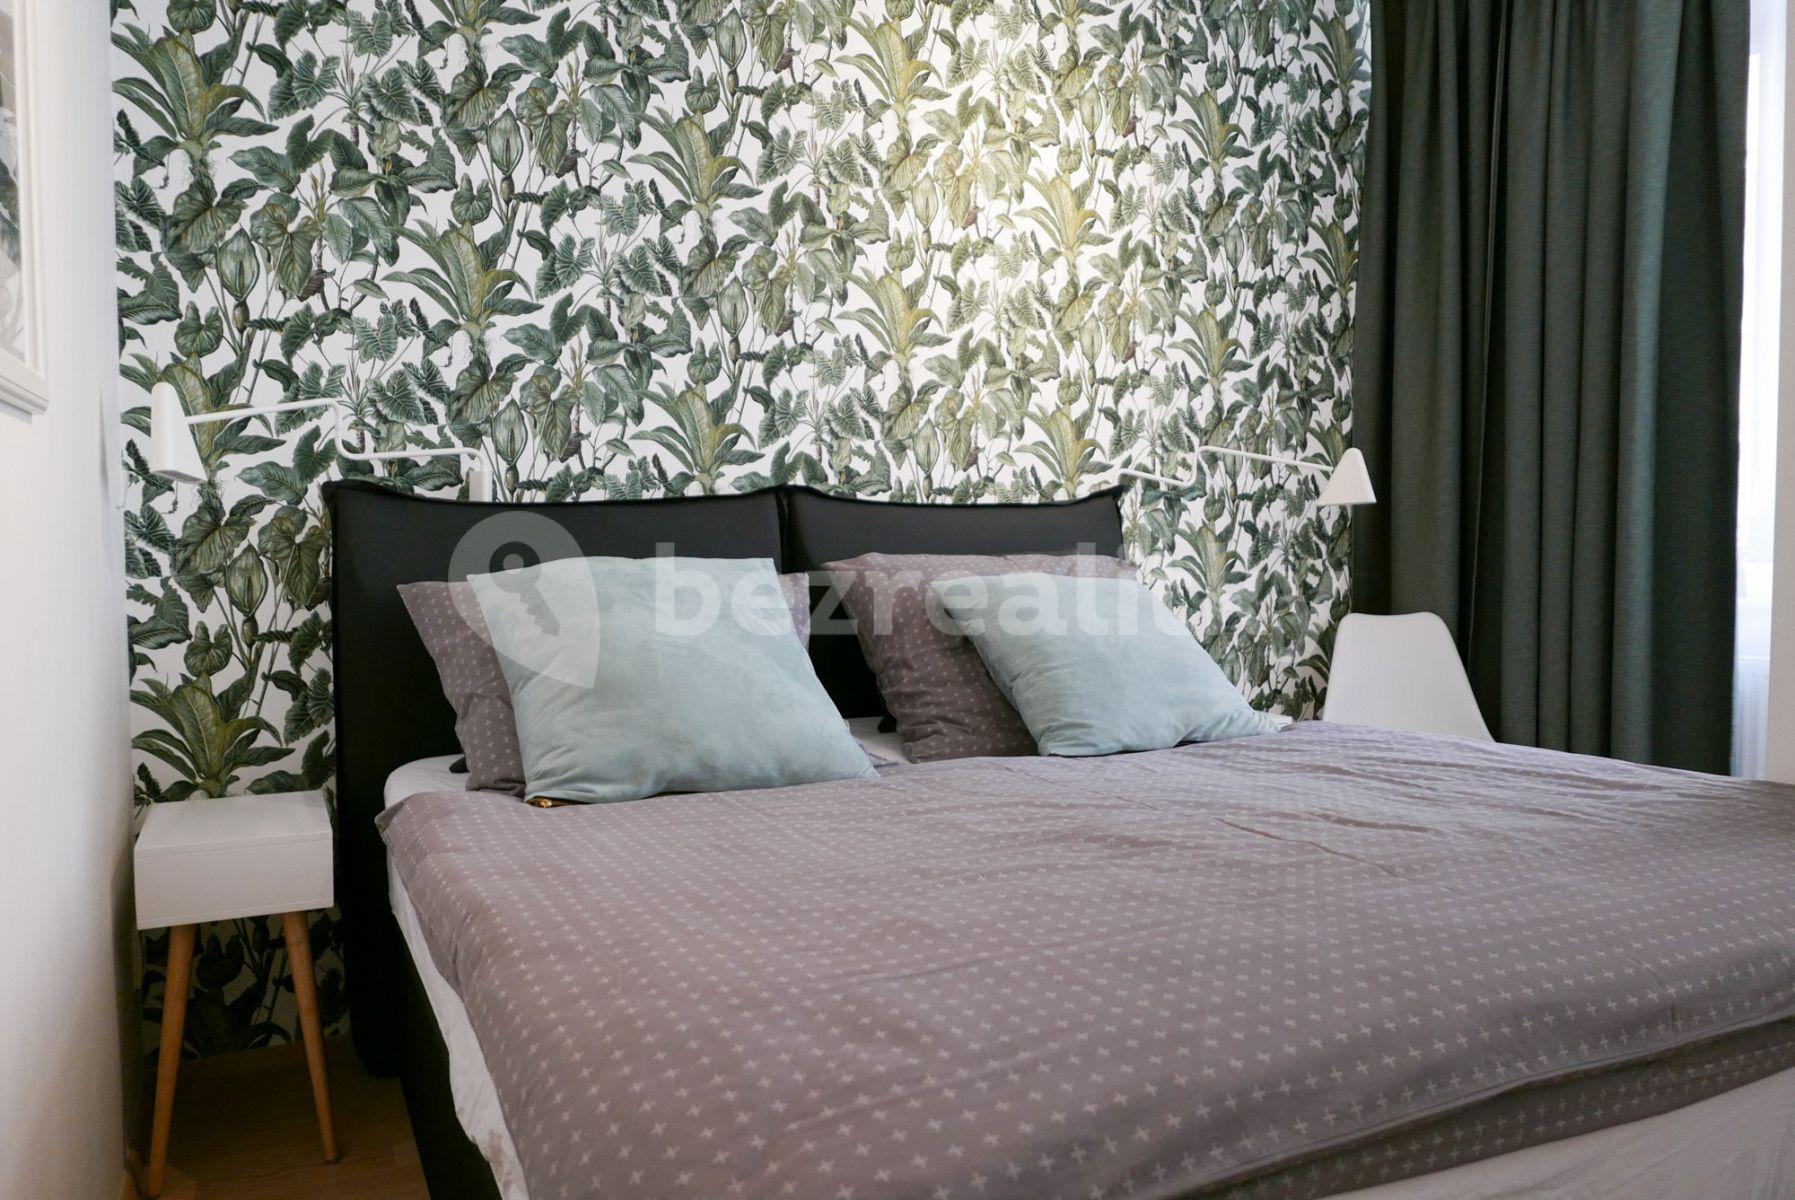 2 bedroom flat to rent, 56 m², Kobližná, Brno, Jihomoravský Region